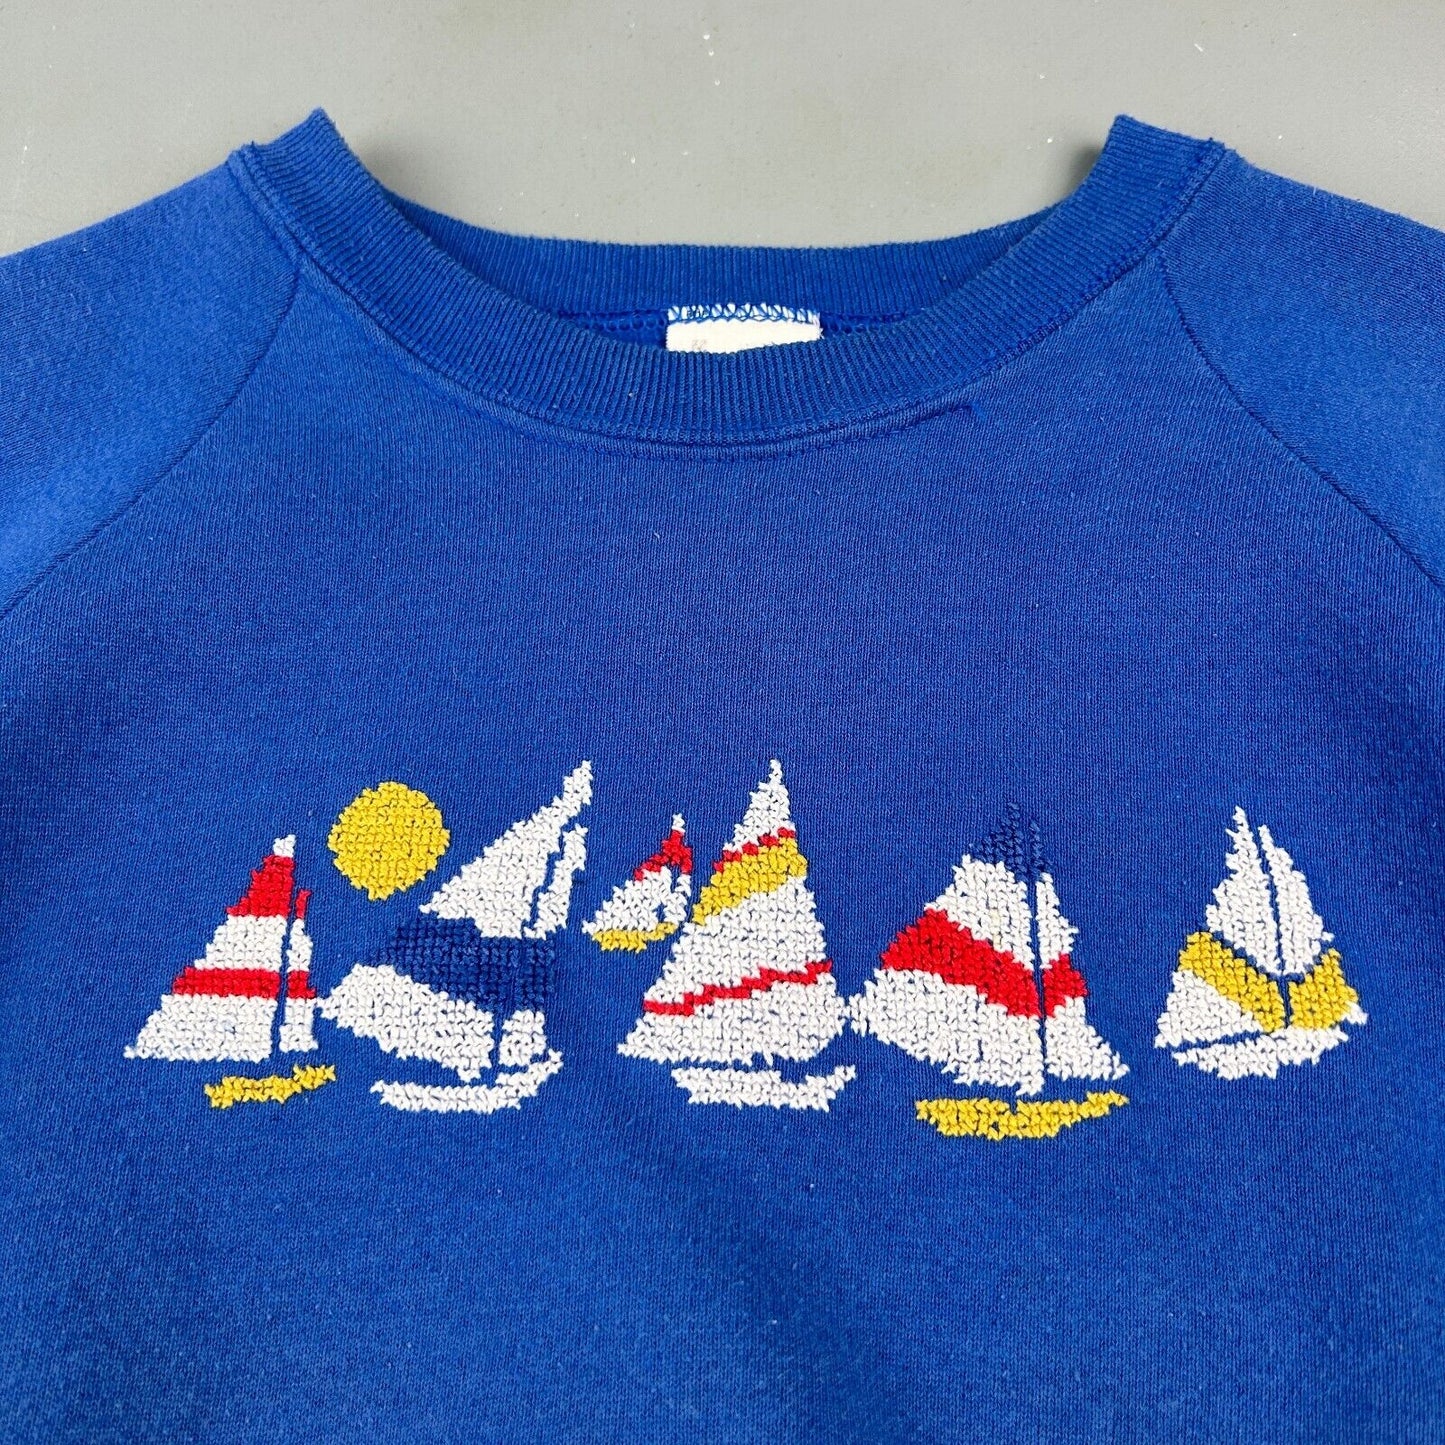 VINTAGE 90s | Hand Knit Sail Boat Print Crewneck Sweater sz S-M Adult